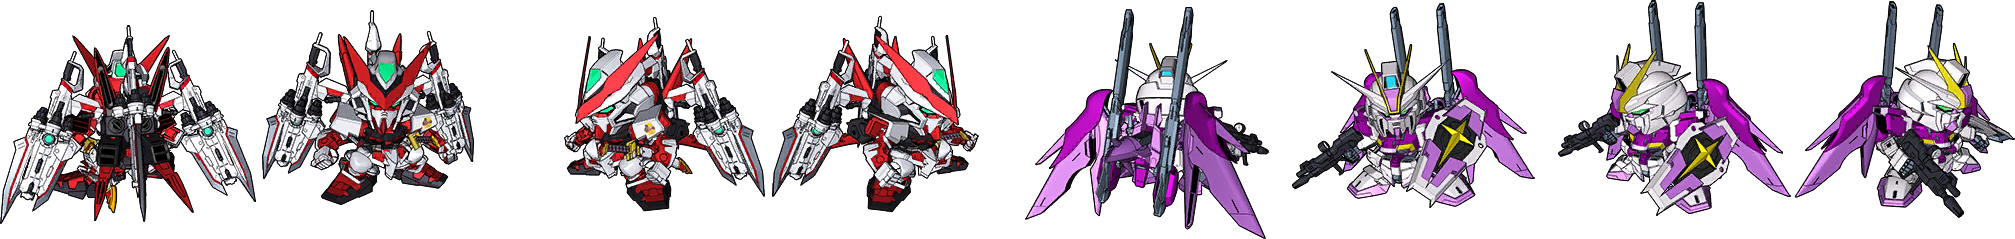 Gundam Seed Destiny Astray R